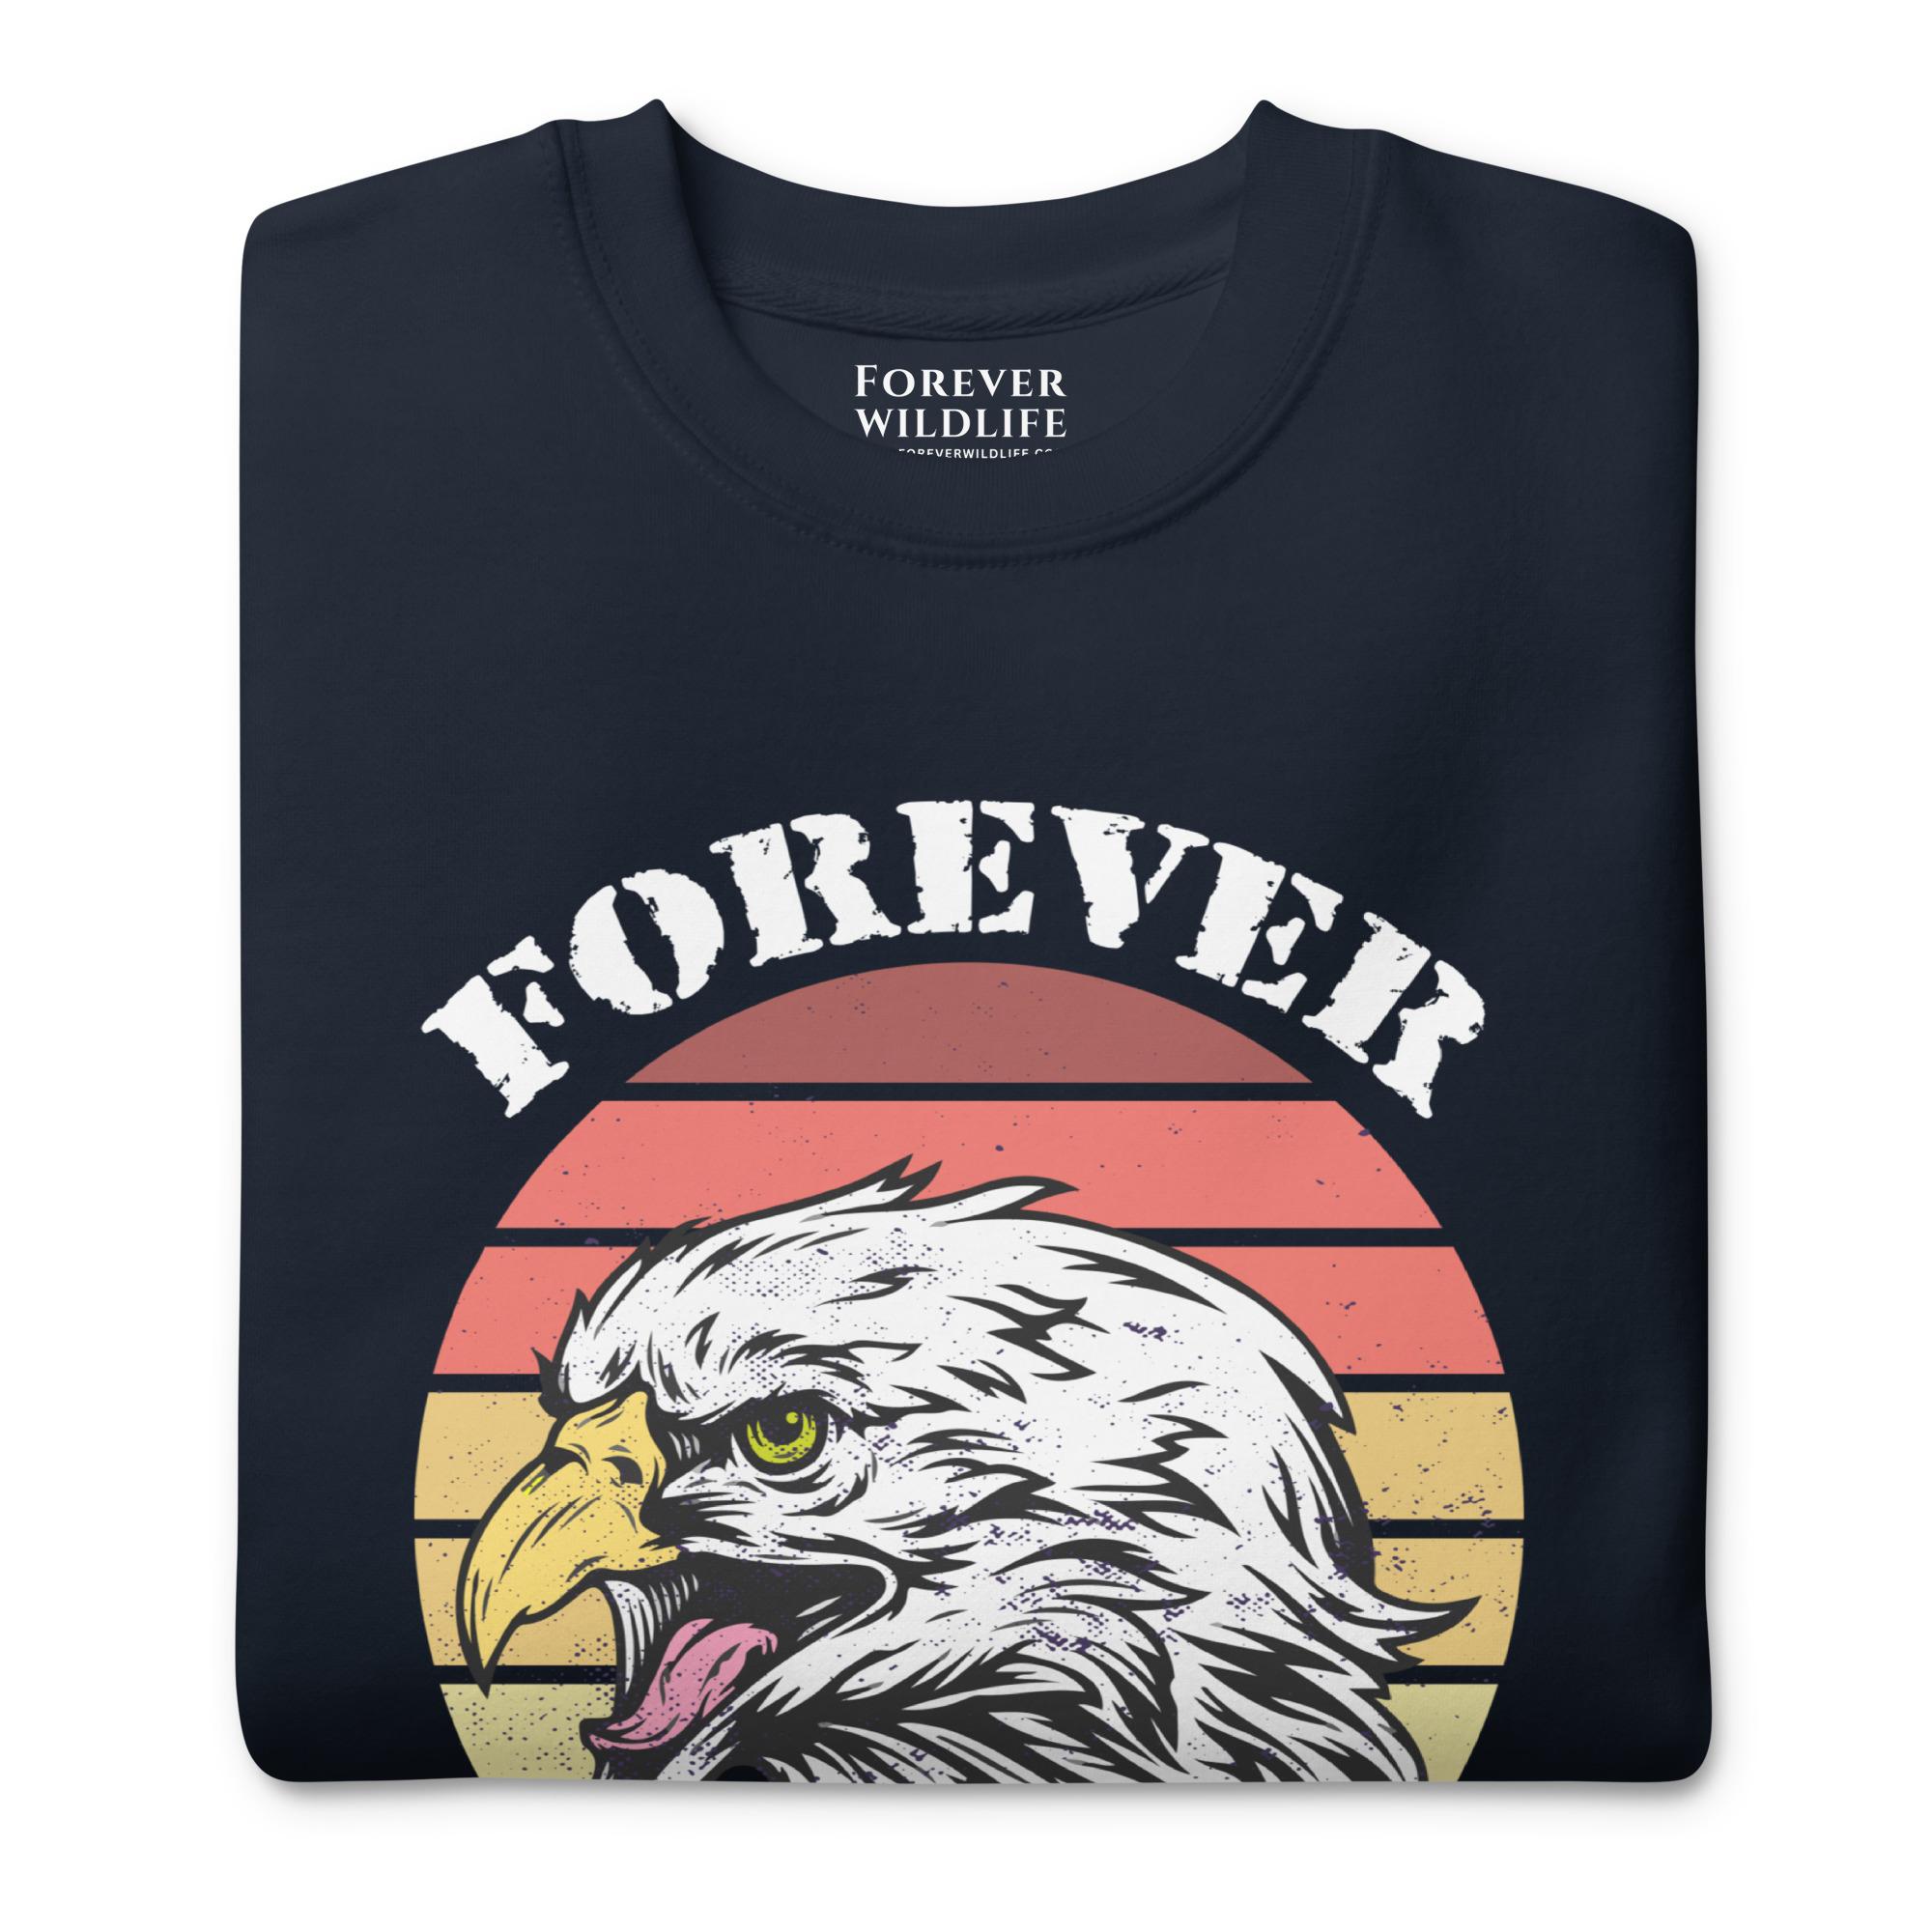 Eagle Sweatshirt in Navy-Premium Wildlife Animal Inspiration Sweatshirt Design, part of Wildlife Sweatshirts & Clothing from Forever Wildlife.